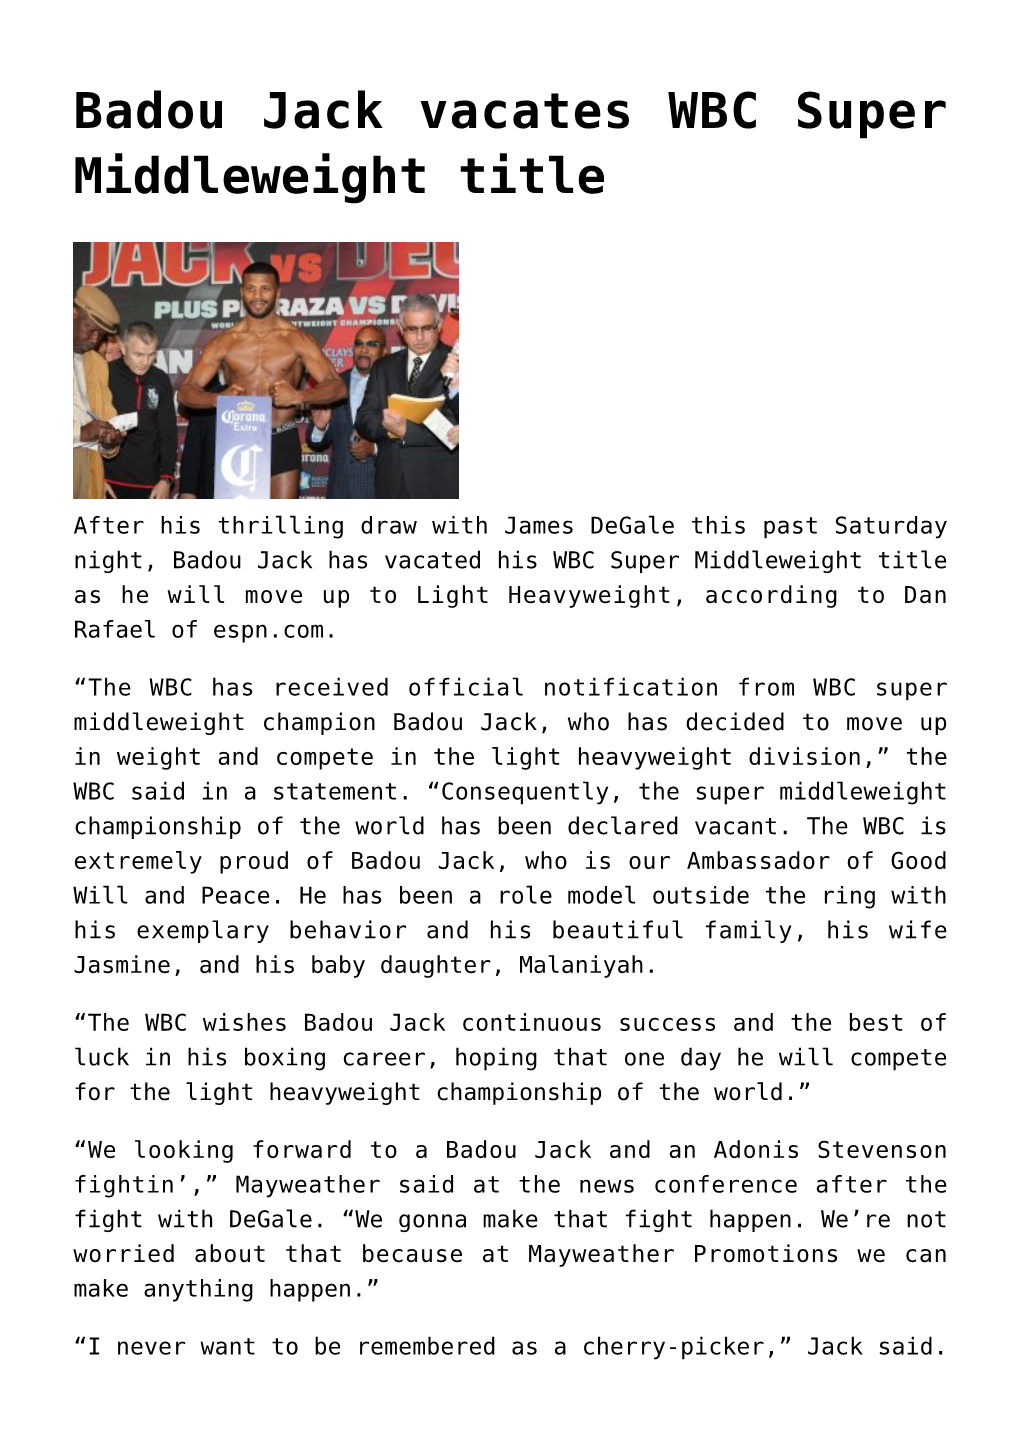 Badou Jack Vacates WBC Super Middleweight Title